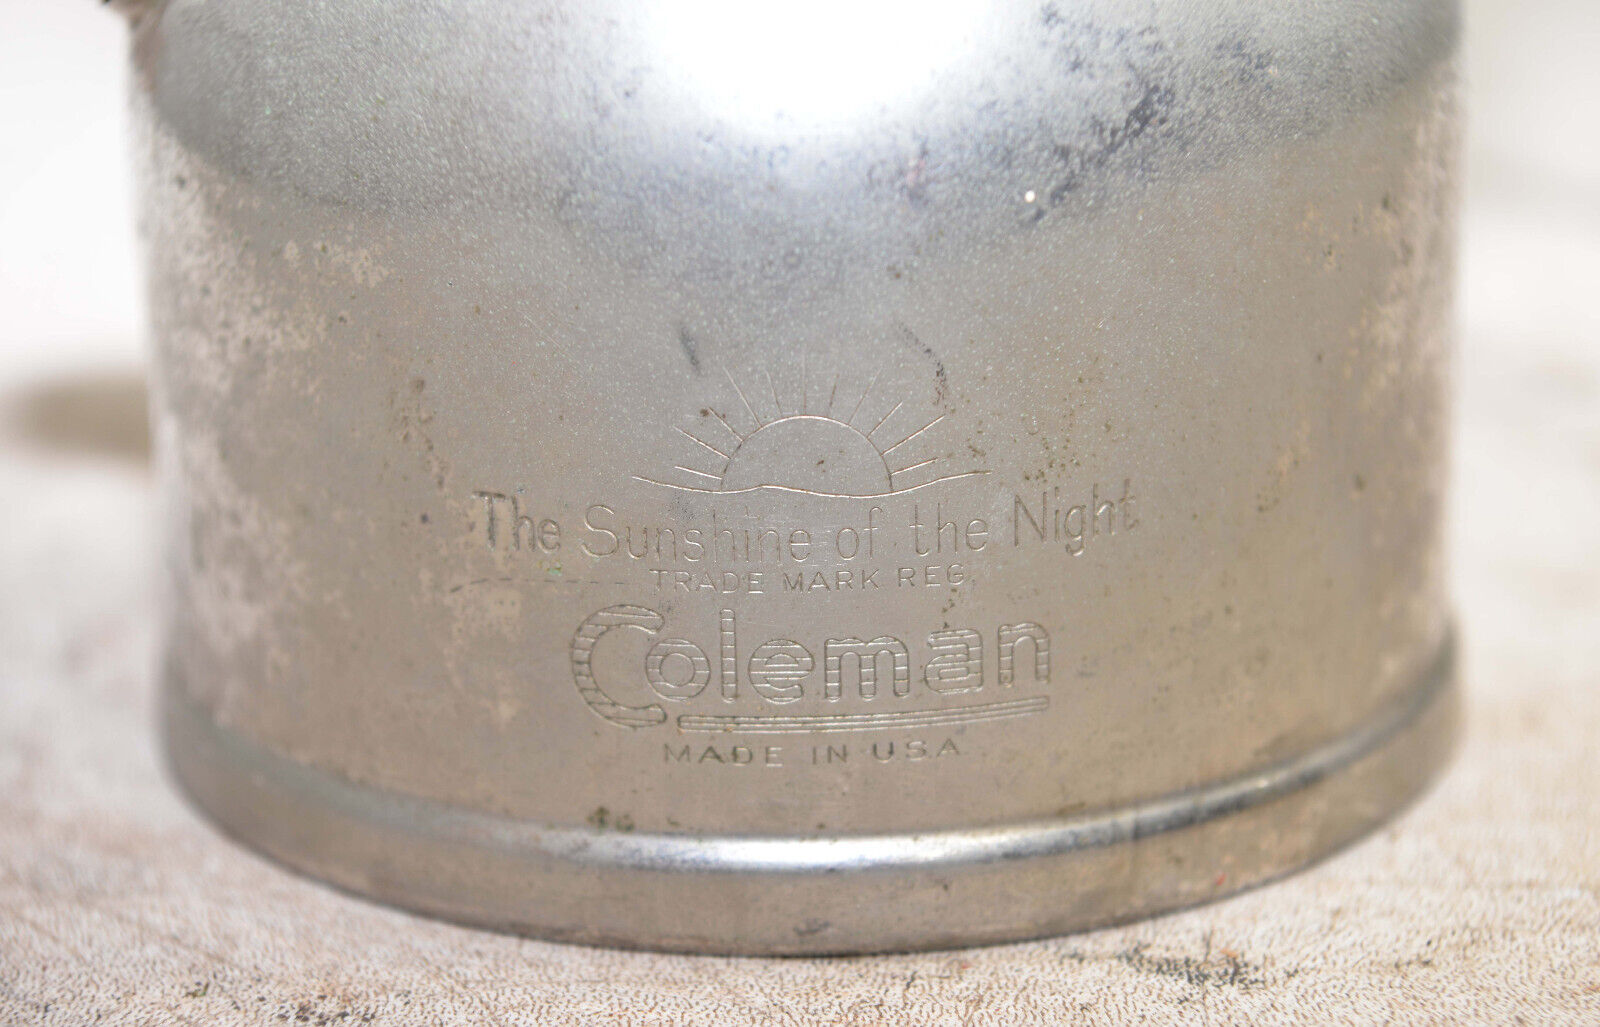 Coleman 1949 lantern 242C single mantel nickel shield & handle collectible light